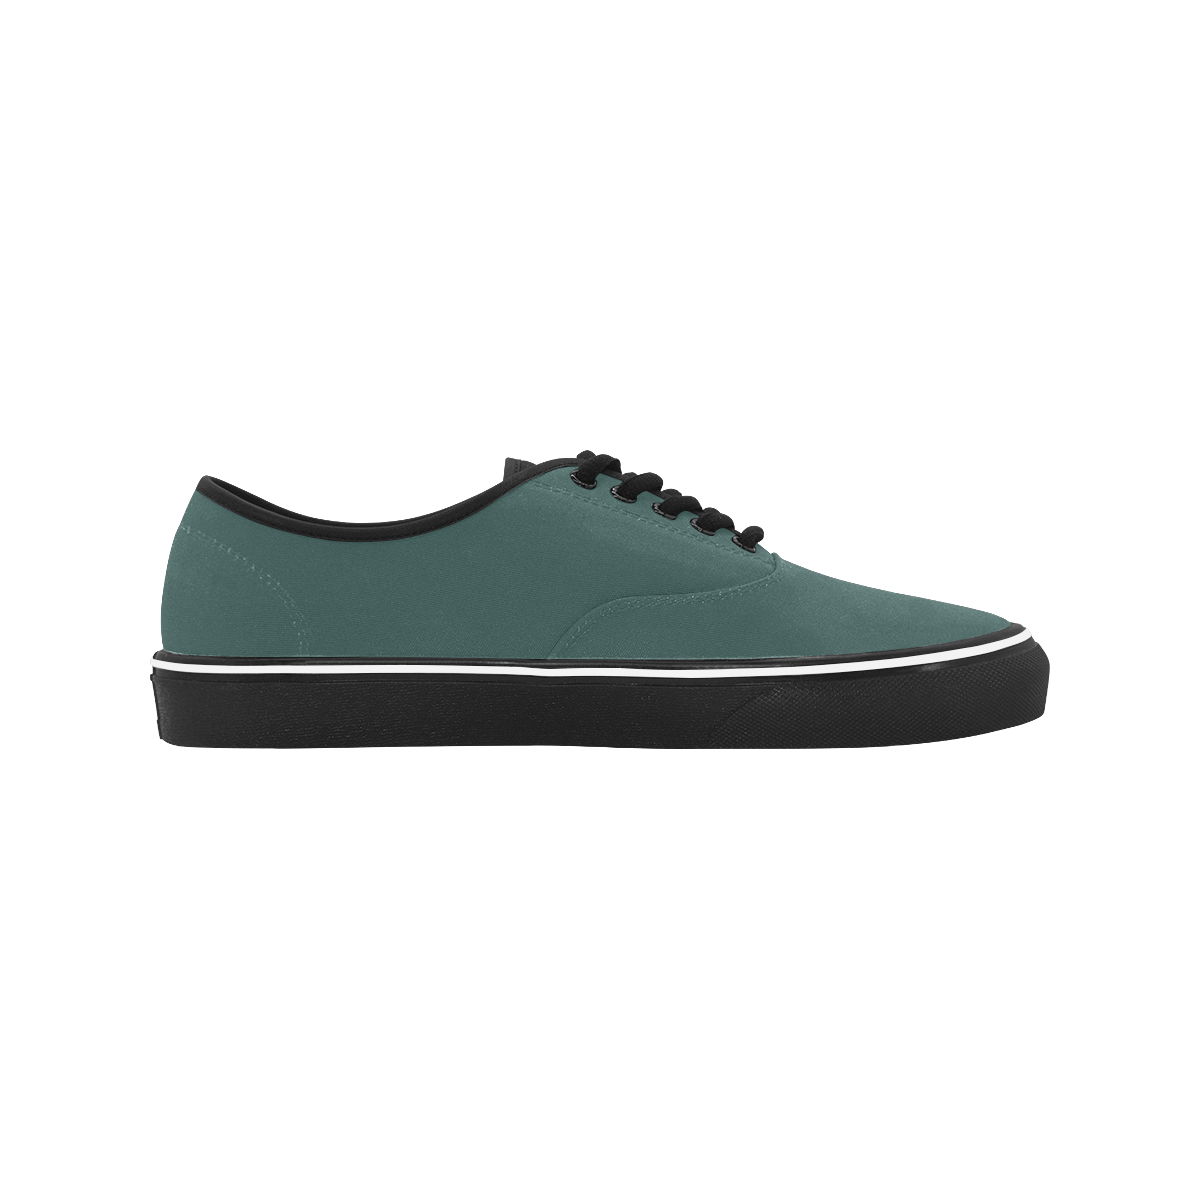 color dark slate grey Classic Men's Canvas Low Top Shoes (Model E001-4)